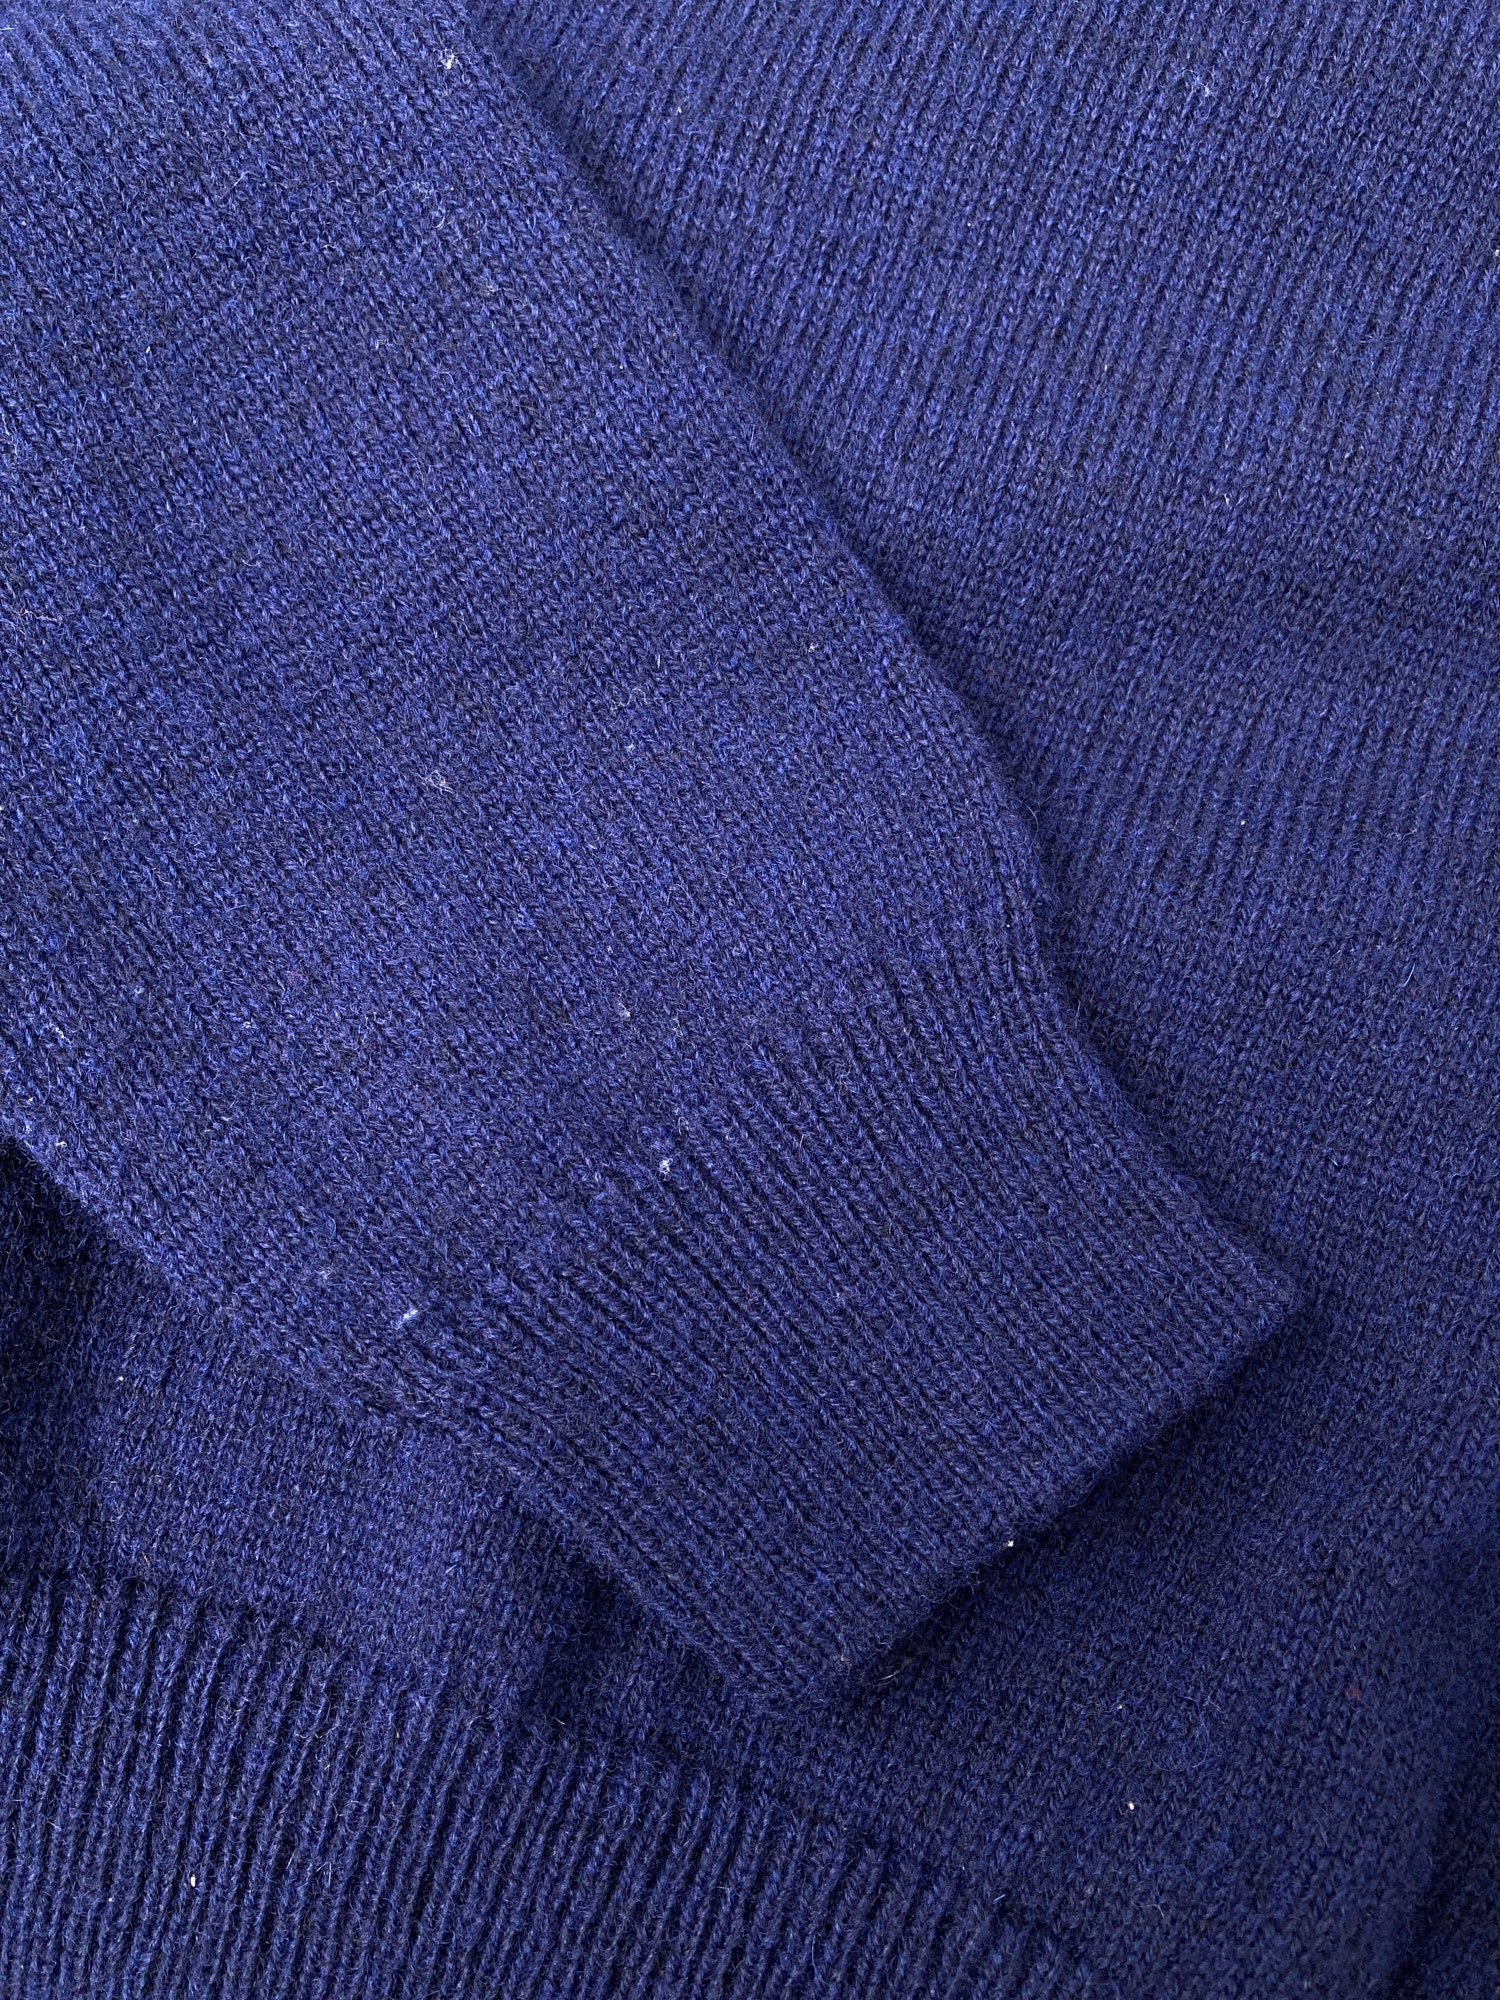 Robe de Chambre Comme des Garcons 1997 navy wool curved line jumper